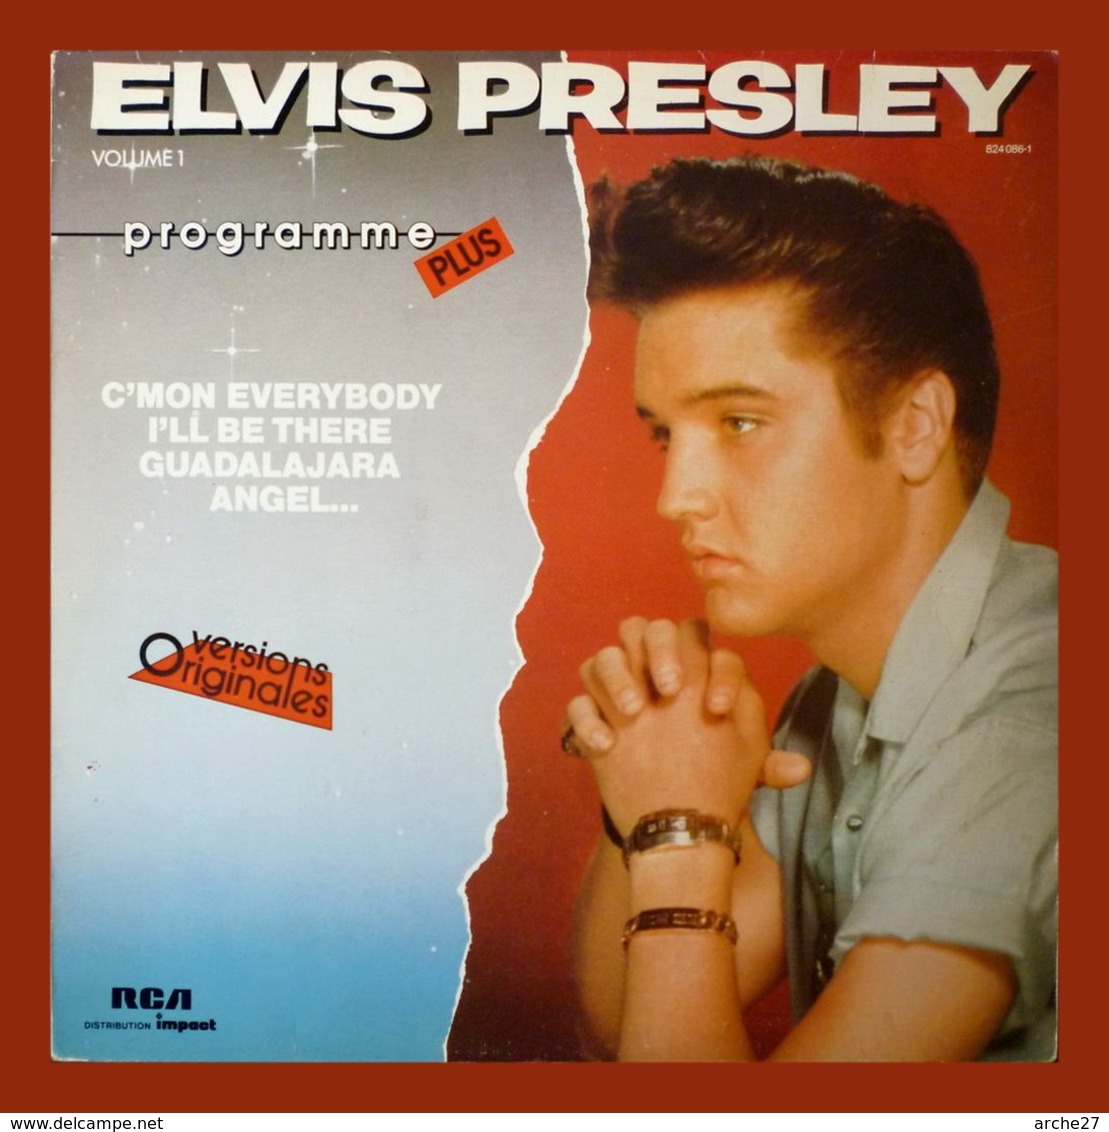 ELVIS PRESLEY - LP - 33T - Disque Vinyle - C'mon Everybody - Programme Plus - 824086 - Rock